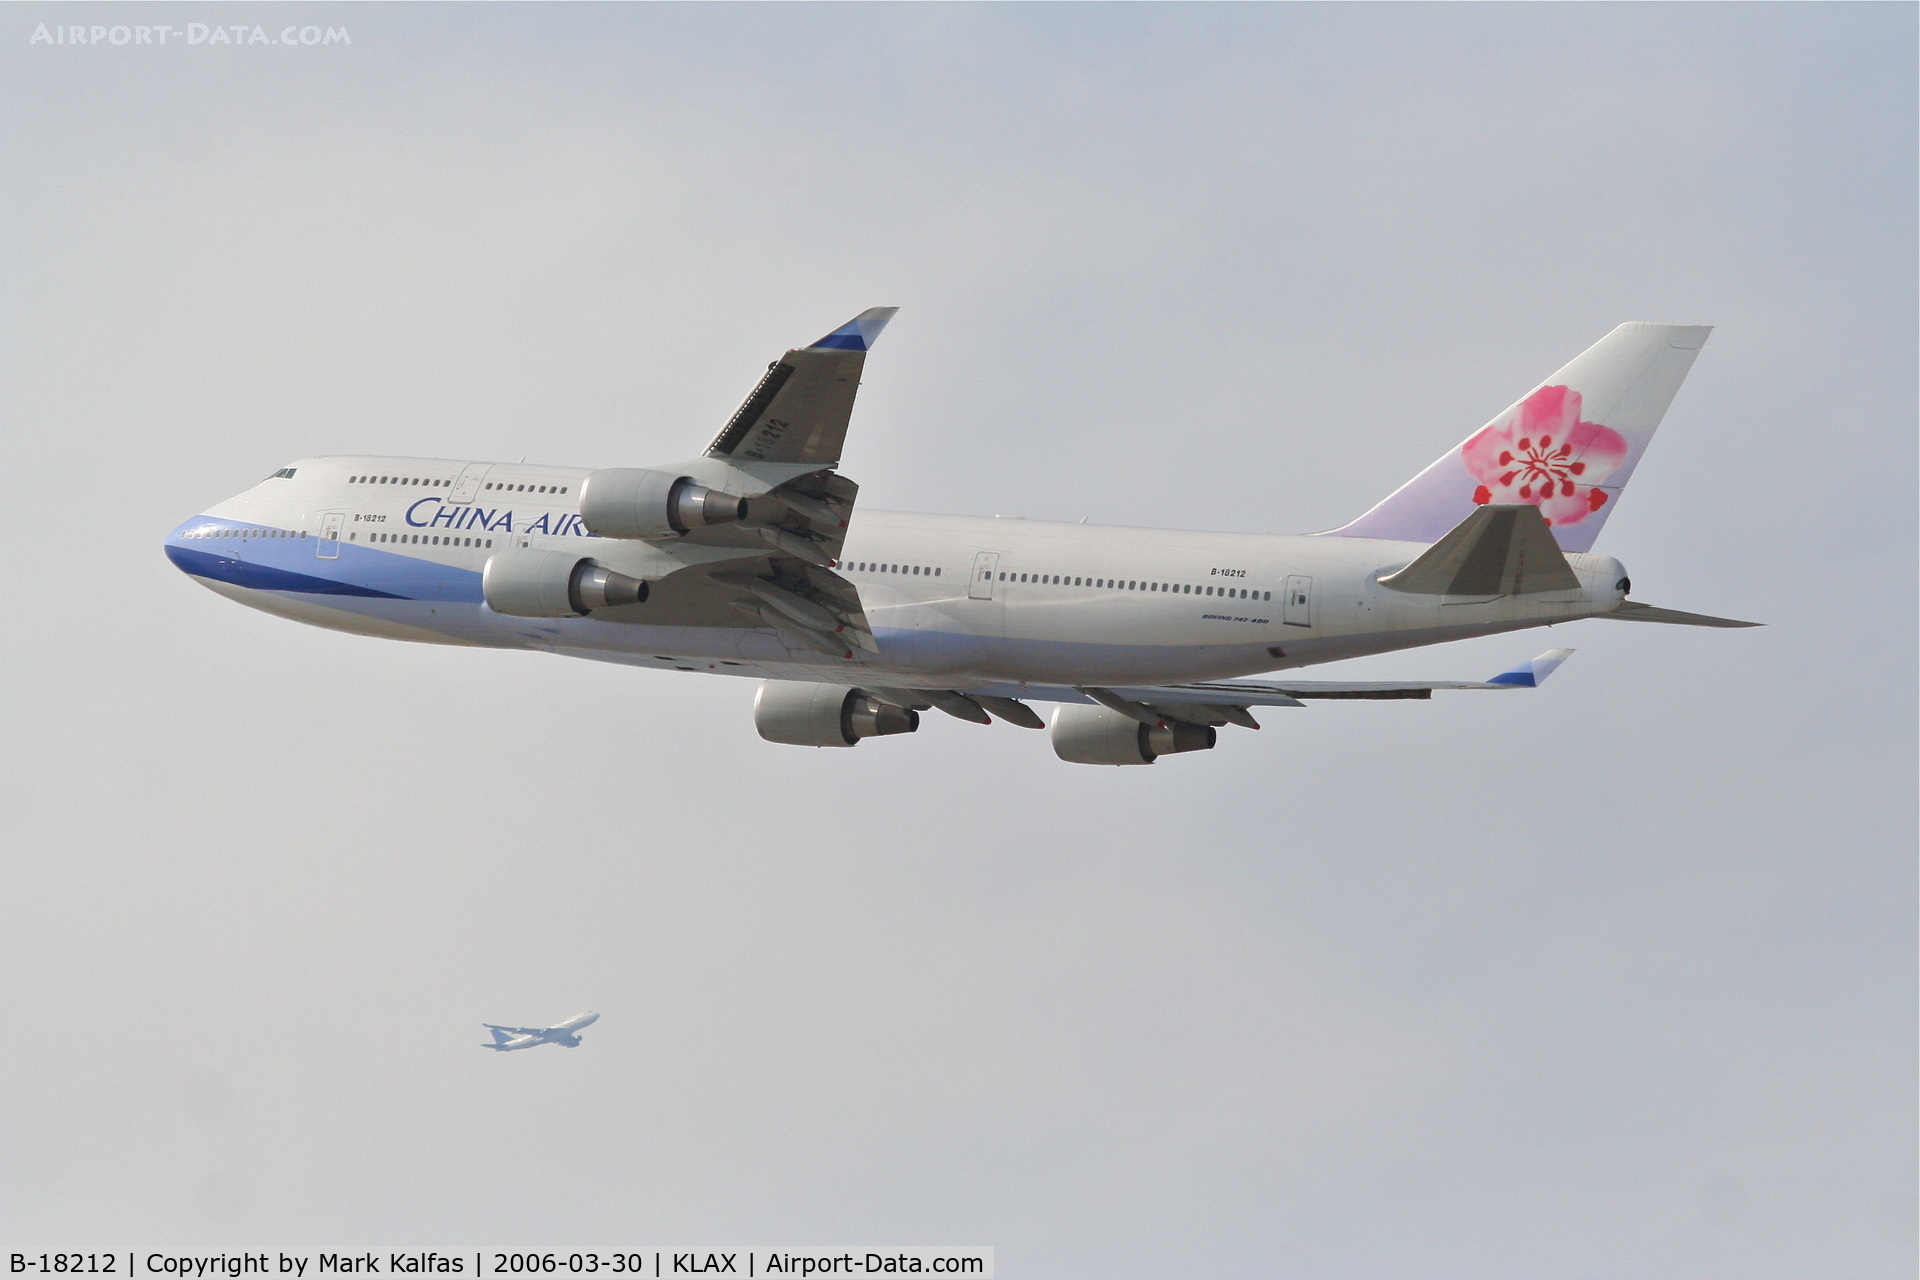 B-18212, 2005 Boeing 747-409 C/N 33736, China Airlines Boeing 747-409, 25R departure KLAX.